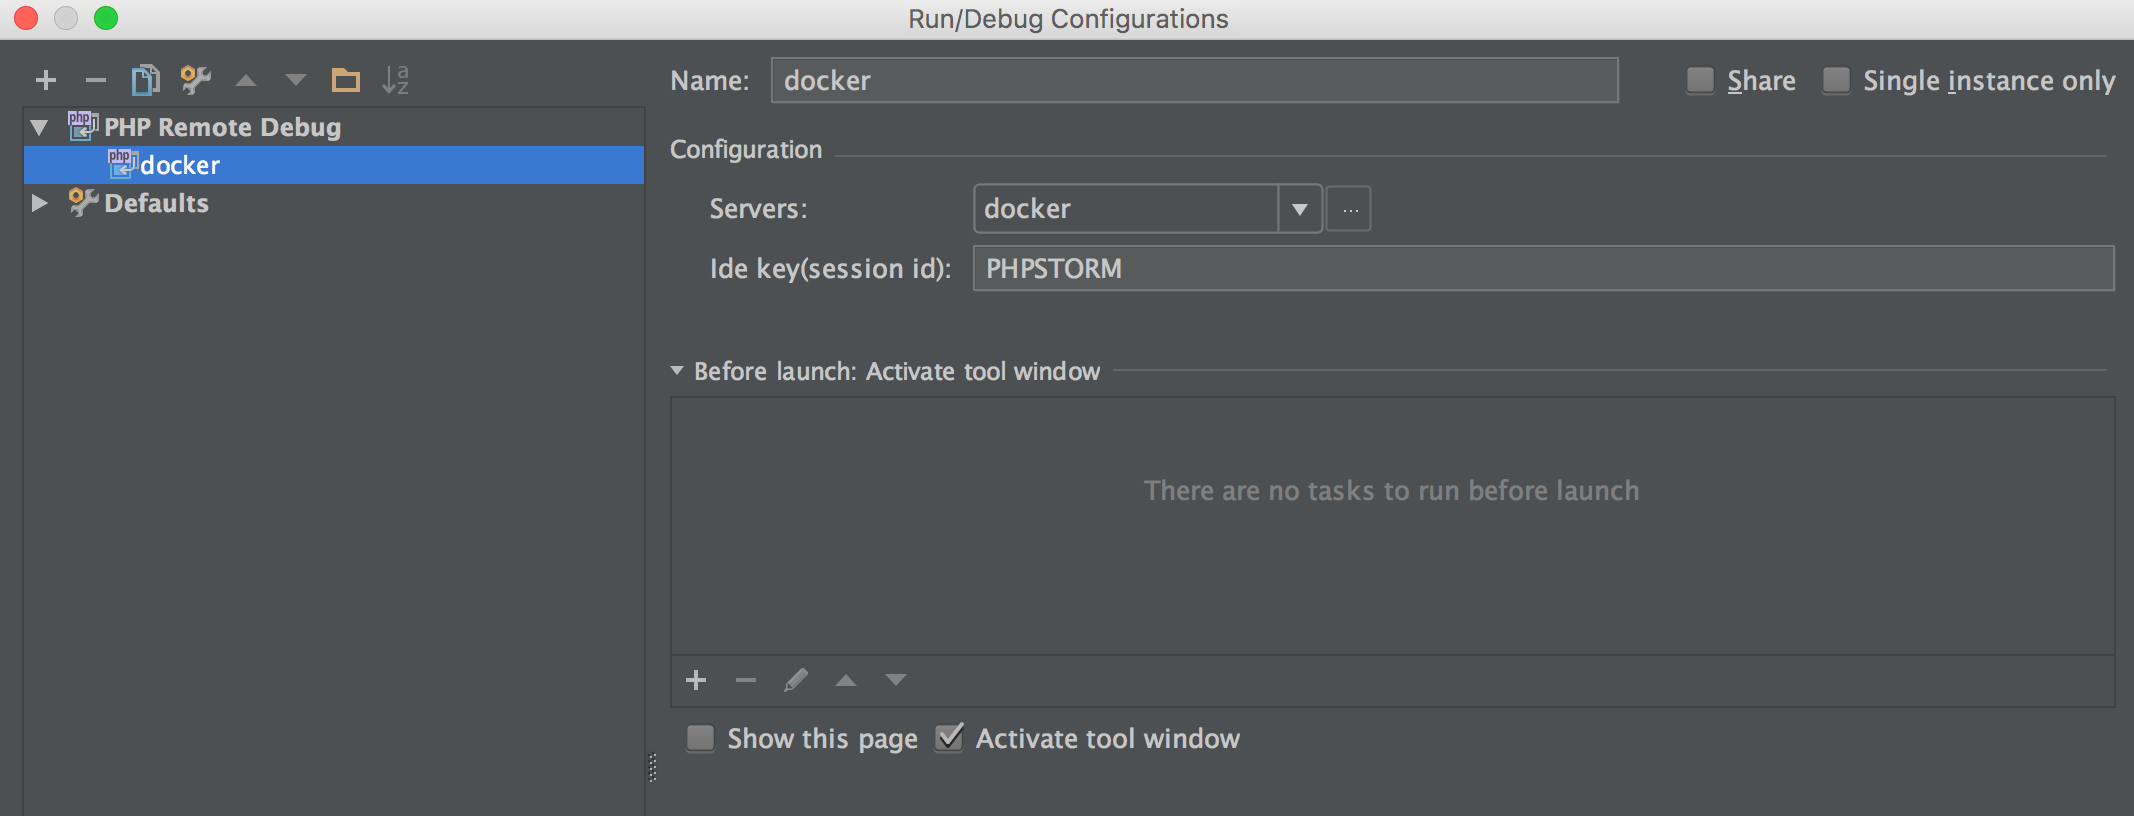 run_debug_configurations